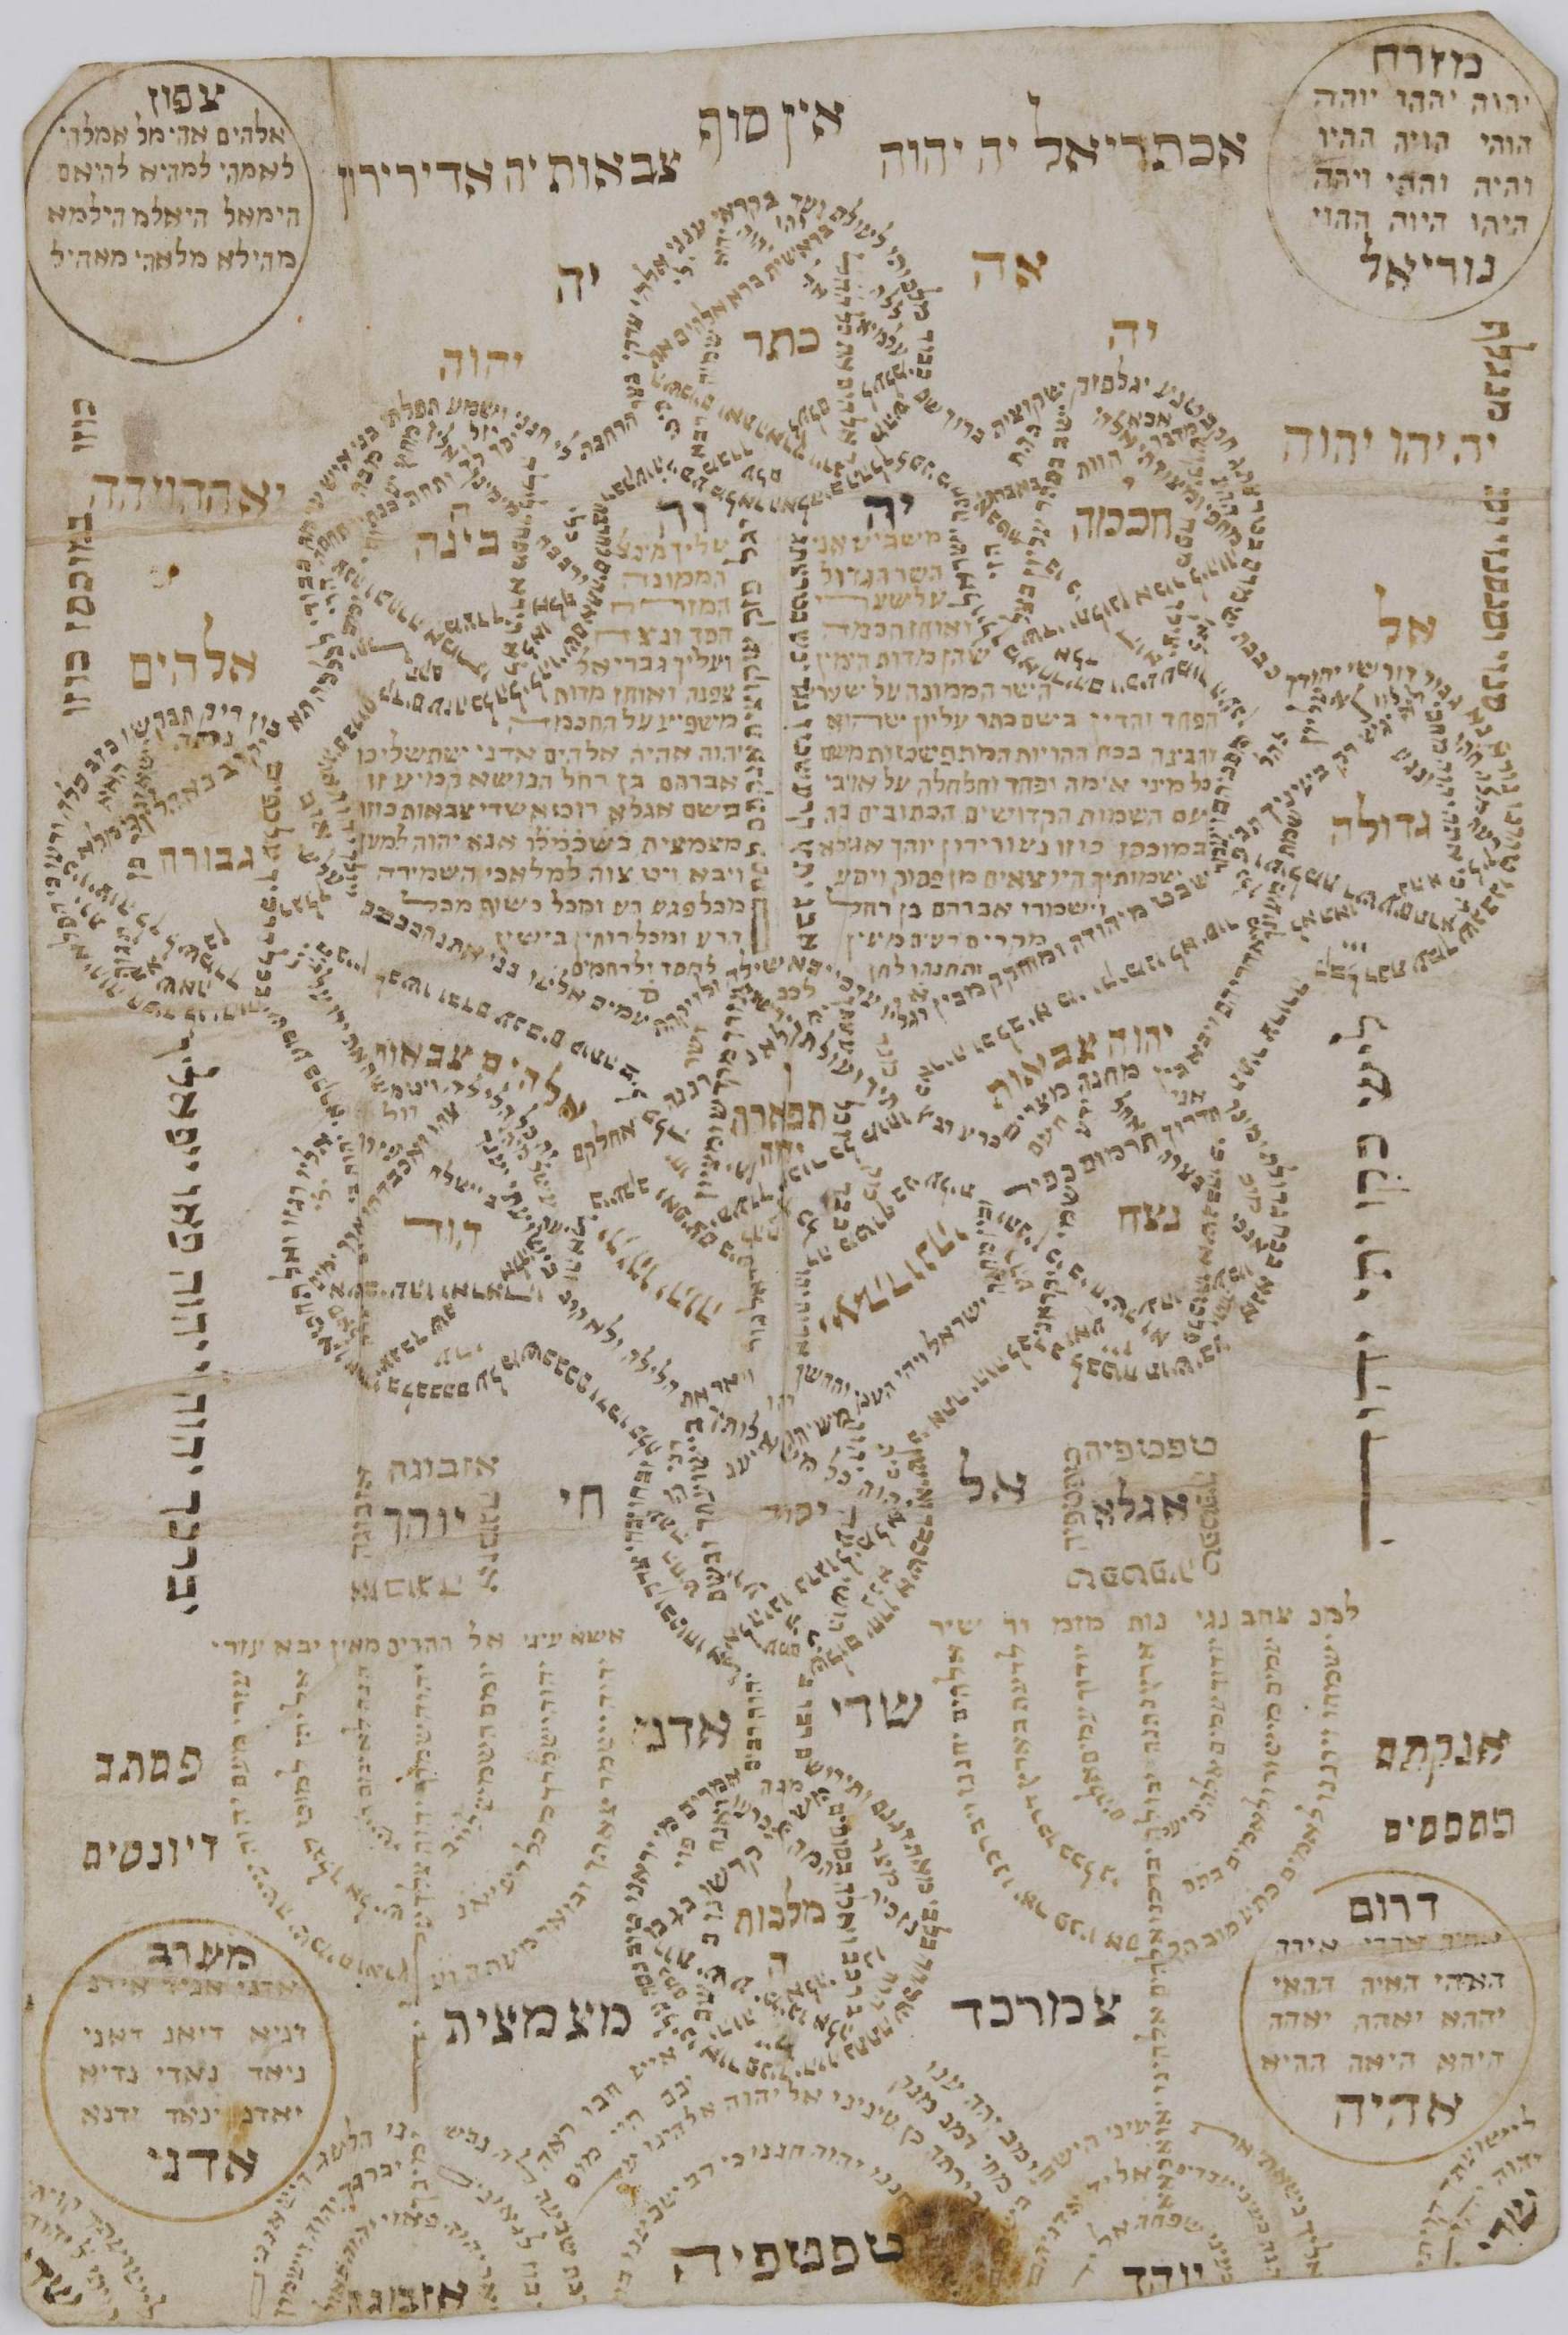 Ilan Sefirot - Kabbalistic Divinity map. Amsterdam, 18th century, NLI